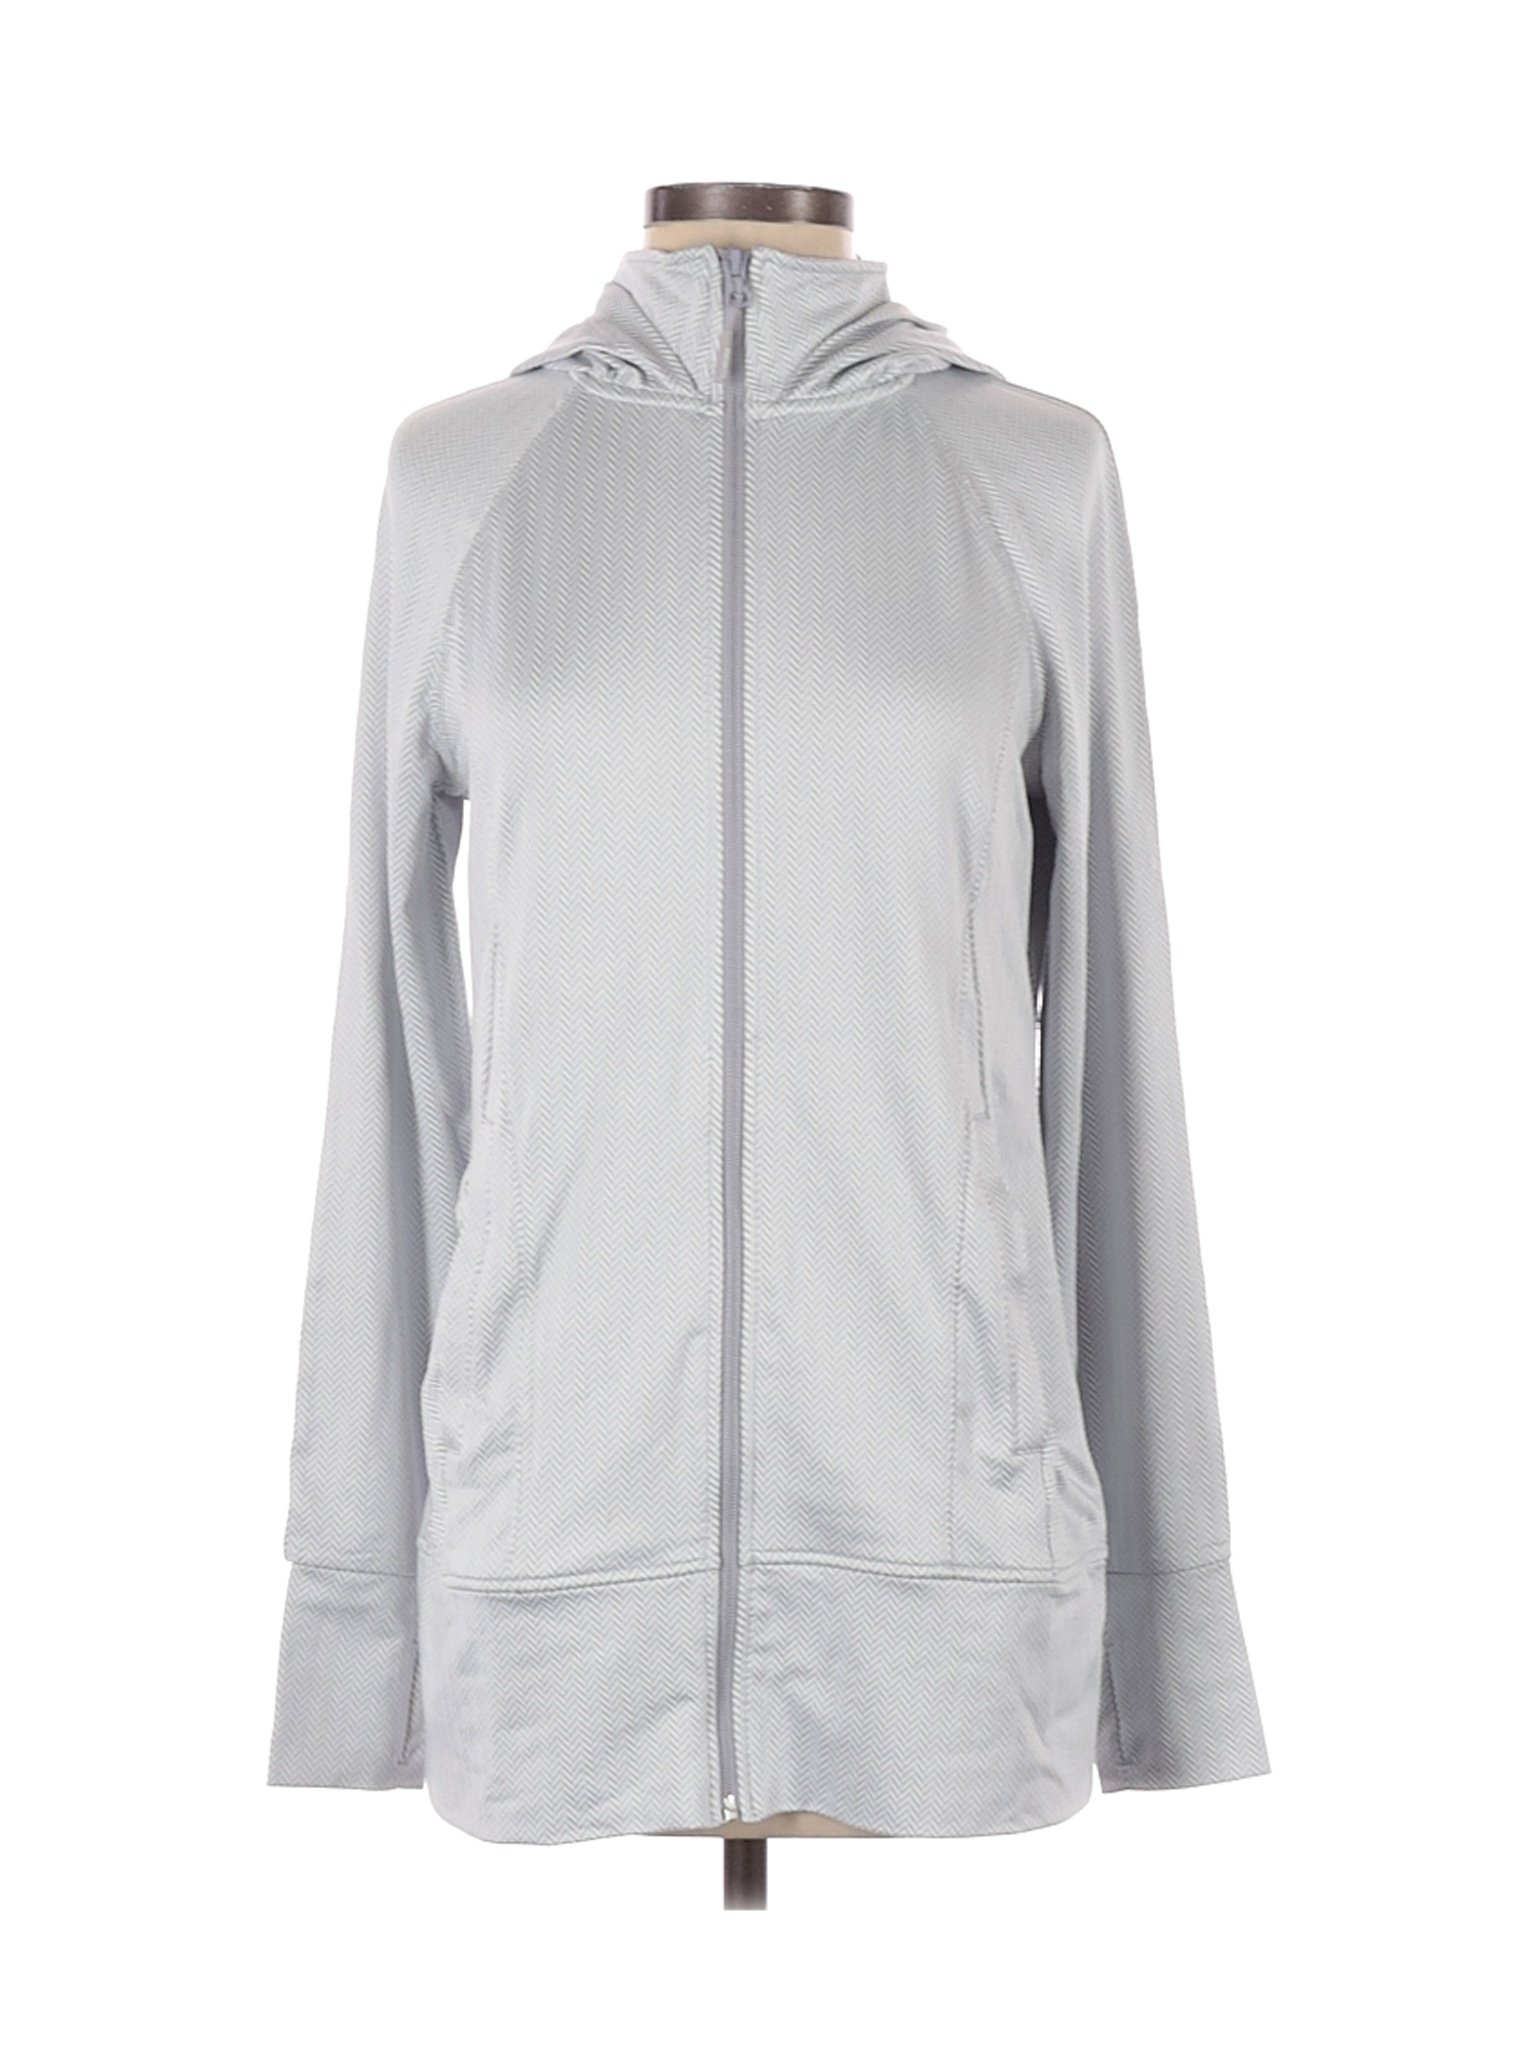 Mondetta Women Gray Track Jacket S | eBay